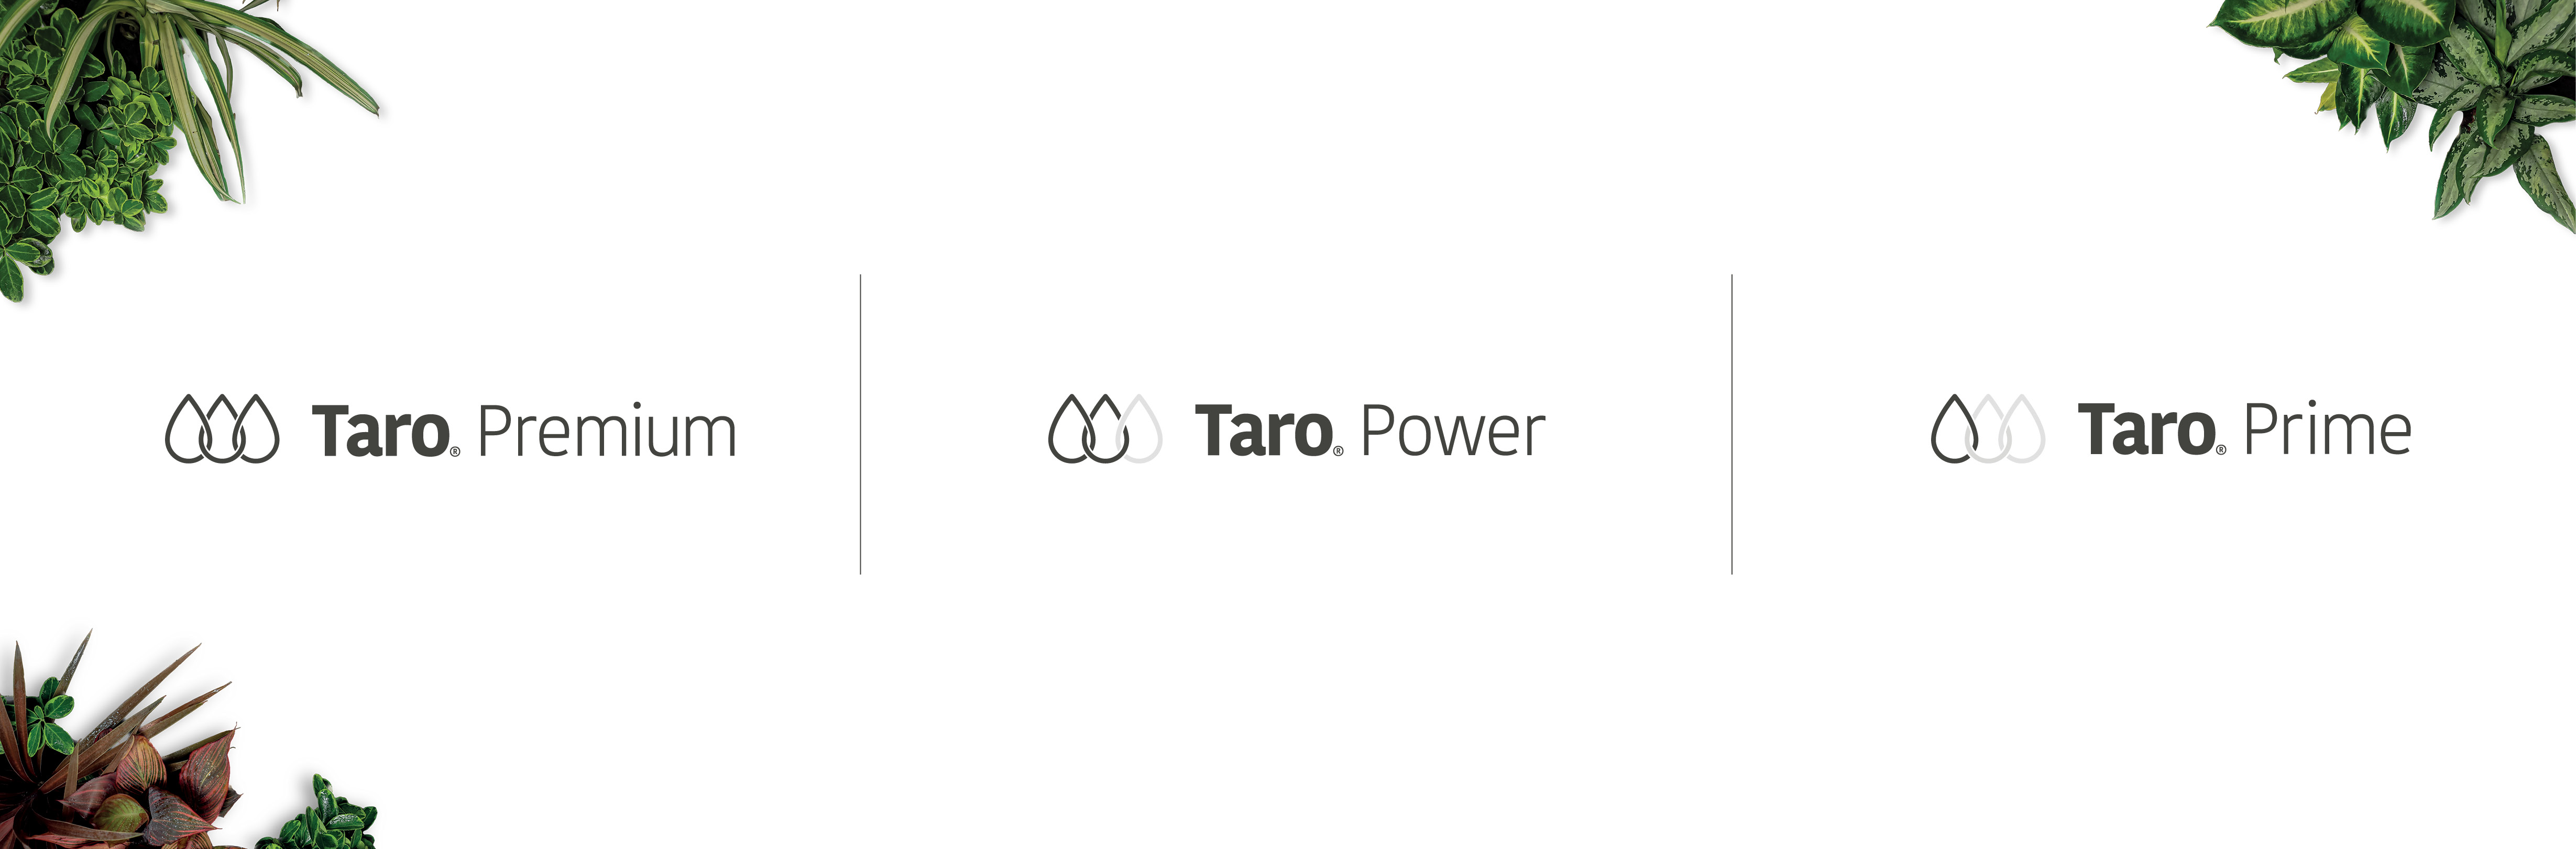 Taro pumps product categories premium, power and prime